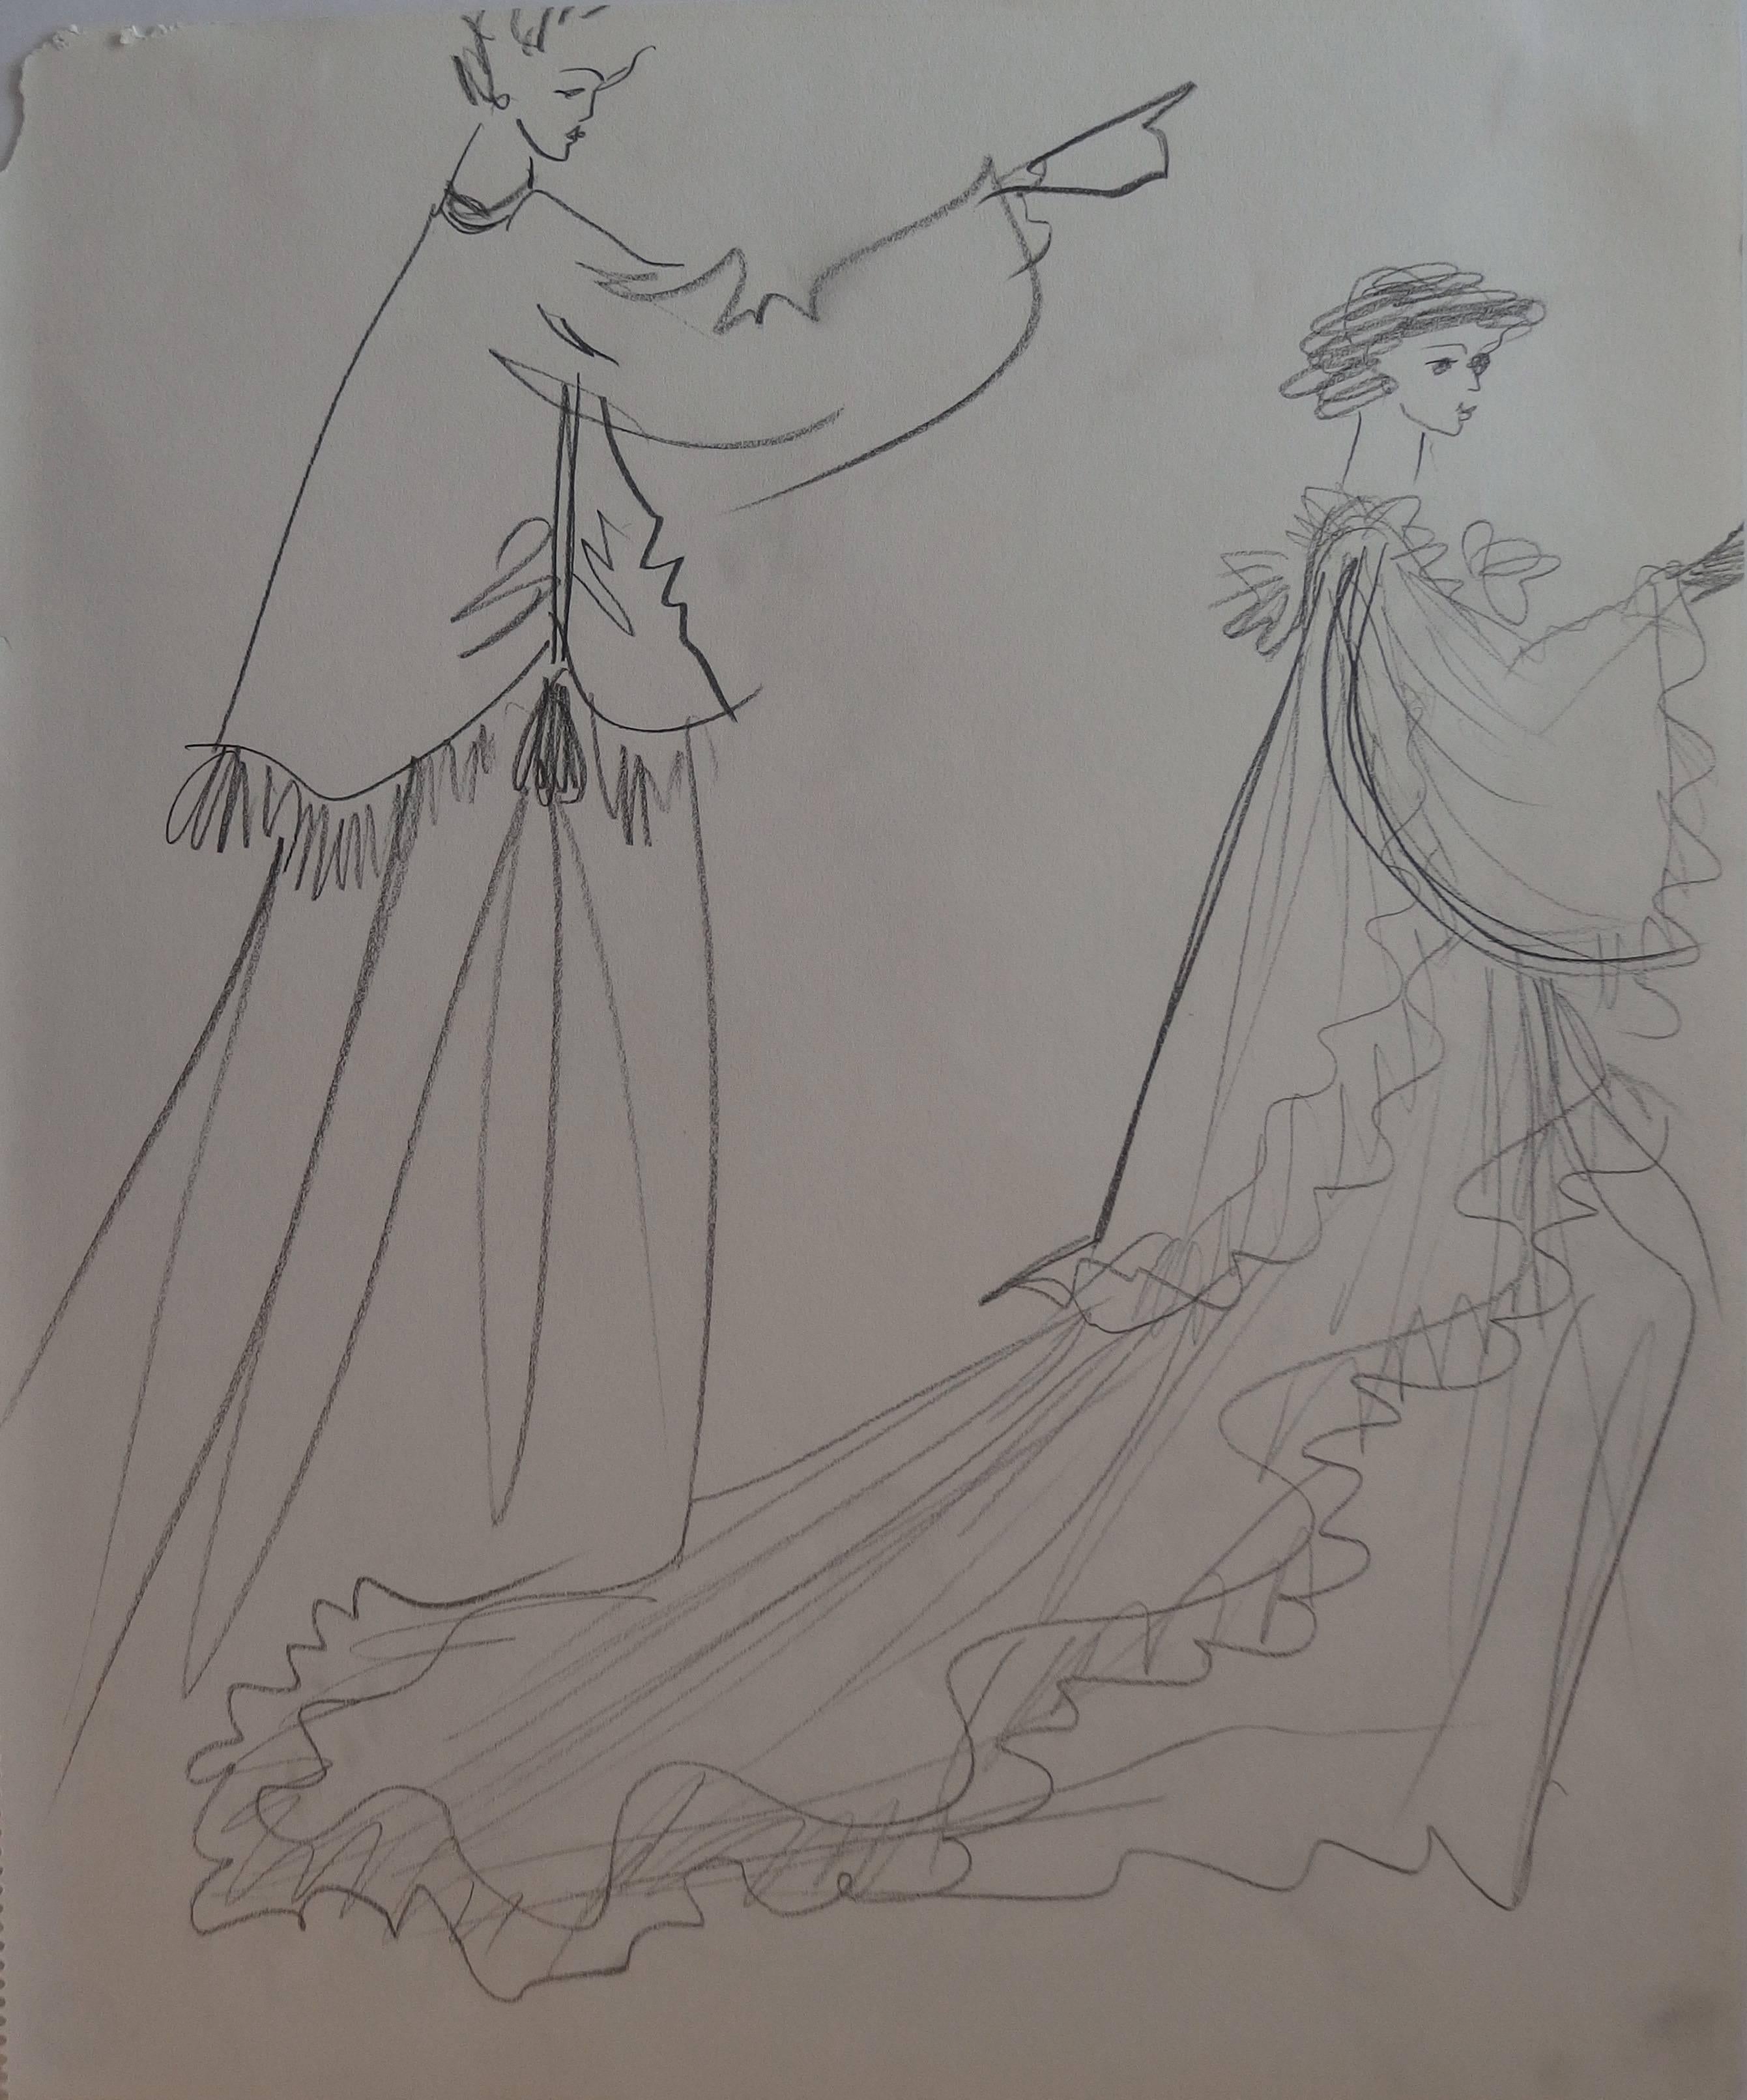 Yves Saint Laurent Figurative Art - Two Sketches of Dress - Original pencil drawing - c. 1980